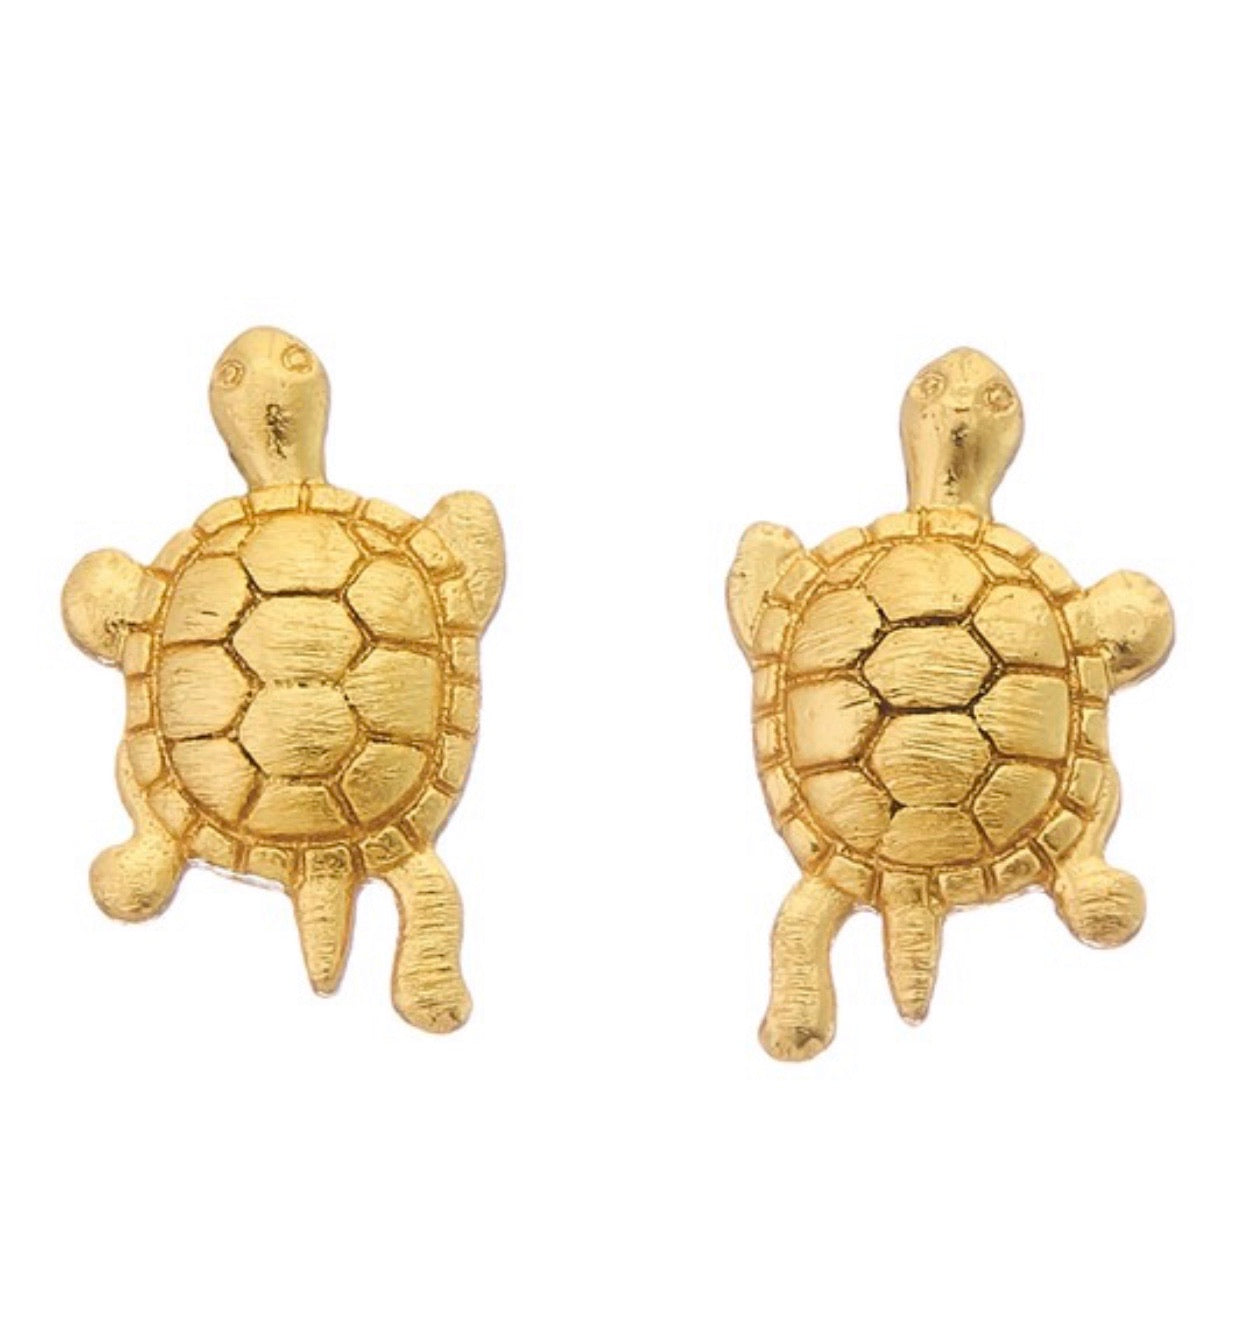 Gold dipped mini turtles